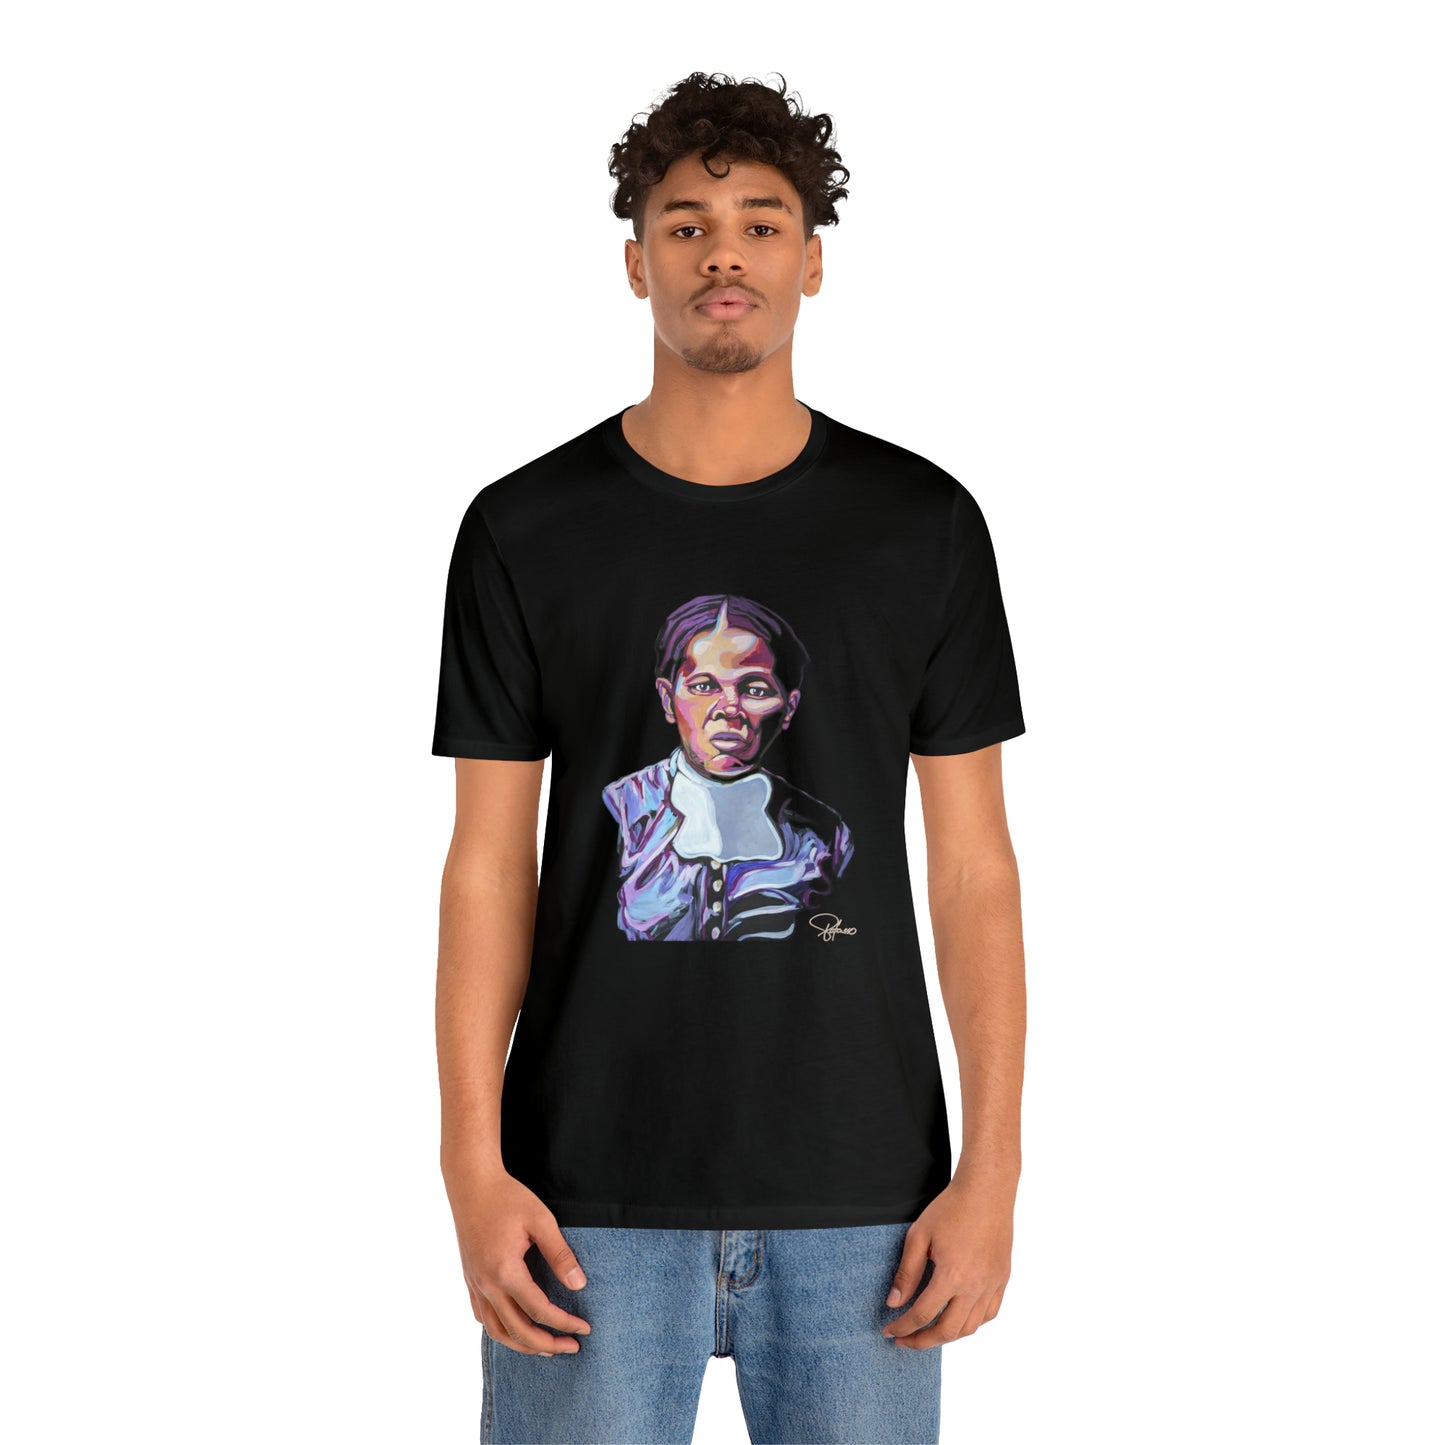 Harriet Tubman painted portrait Unisex Jersey Short Sleeve T-shirt | Honor Black American legends | Patcasso